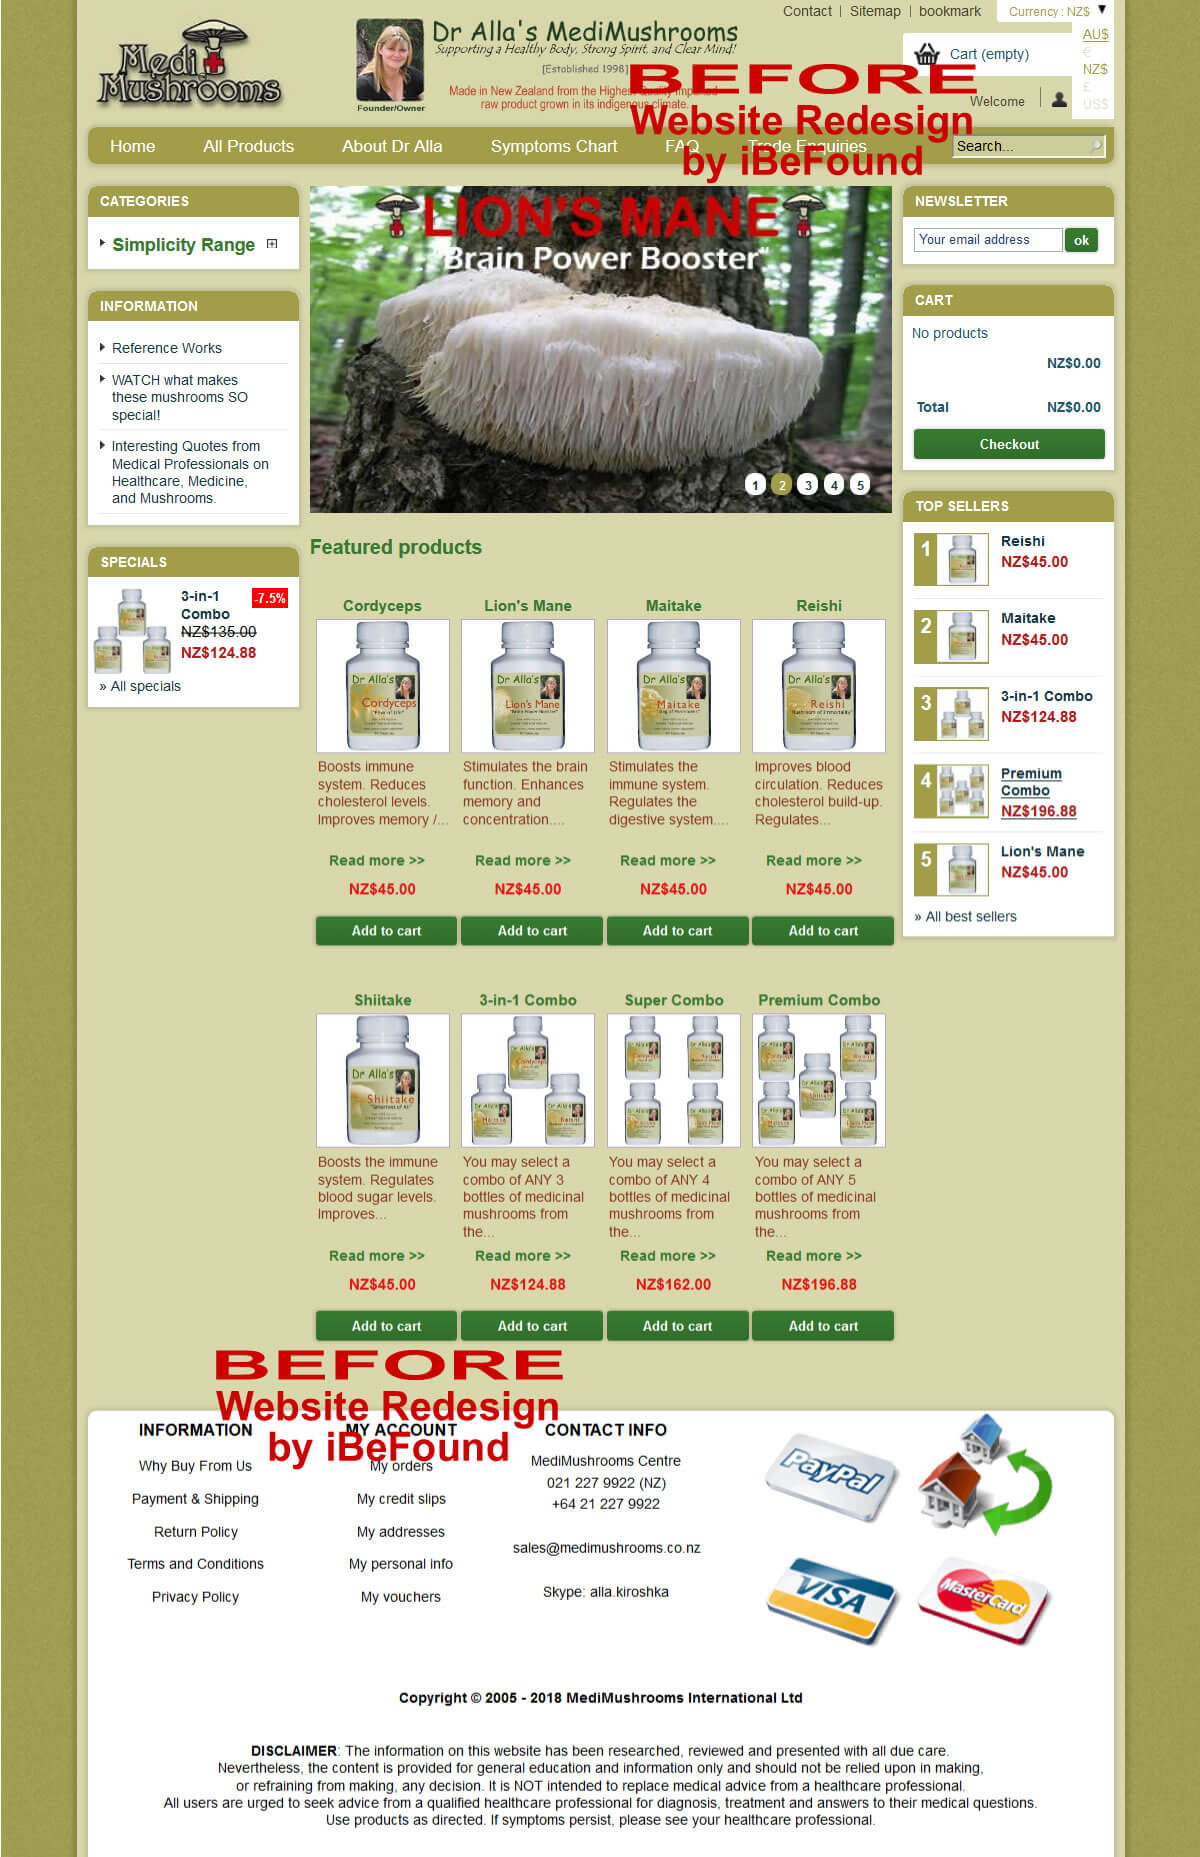 Homepage Of MediMushrooms International Ltd Before Website Redesign By IBeFound Digital Marketing Division